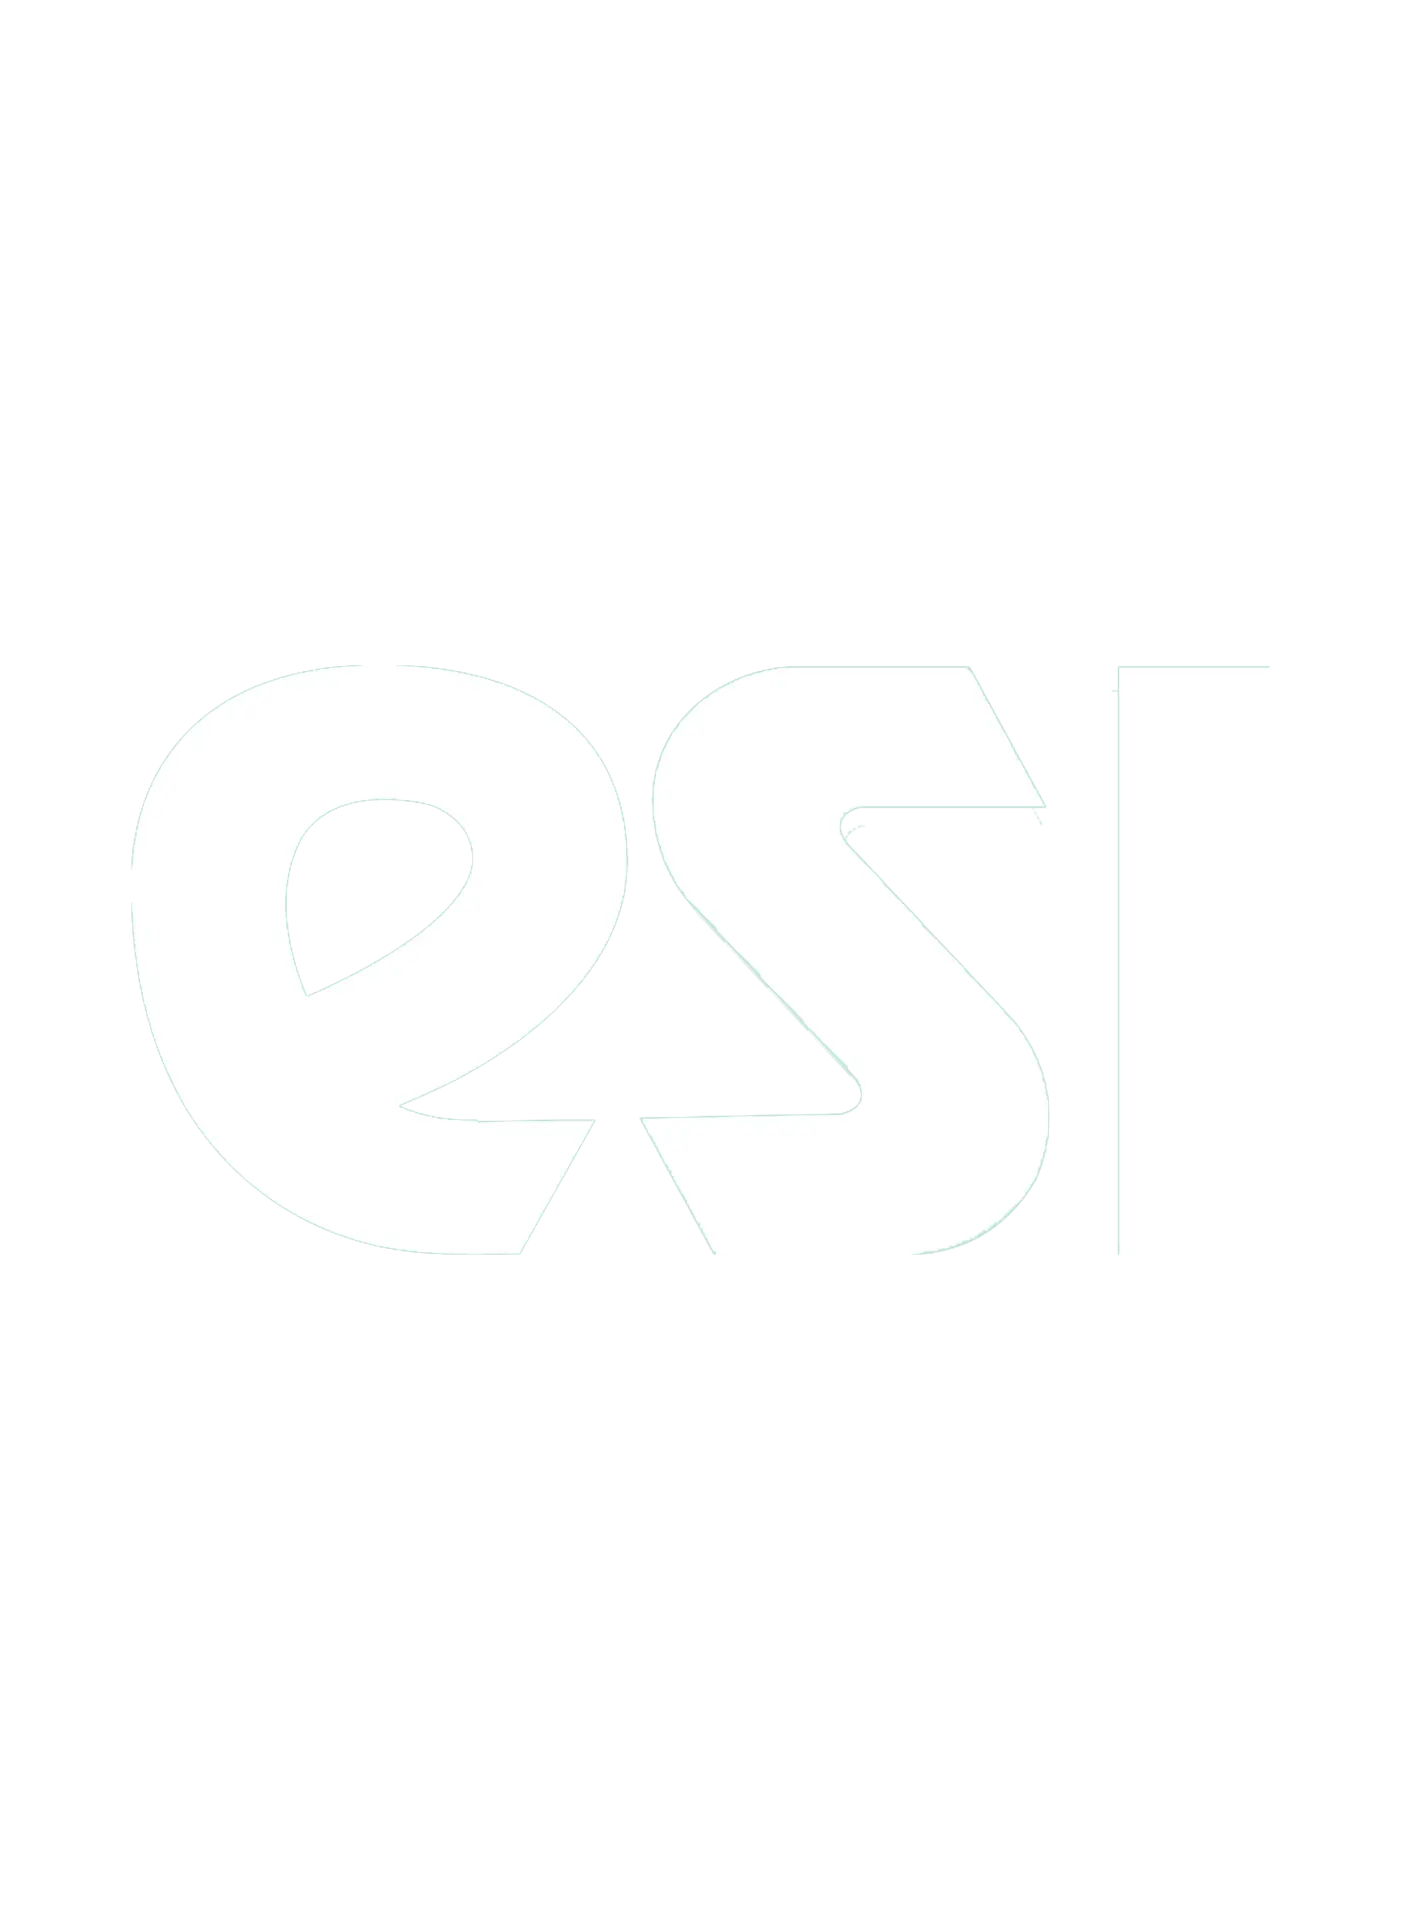 ESI logo in white